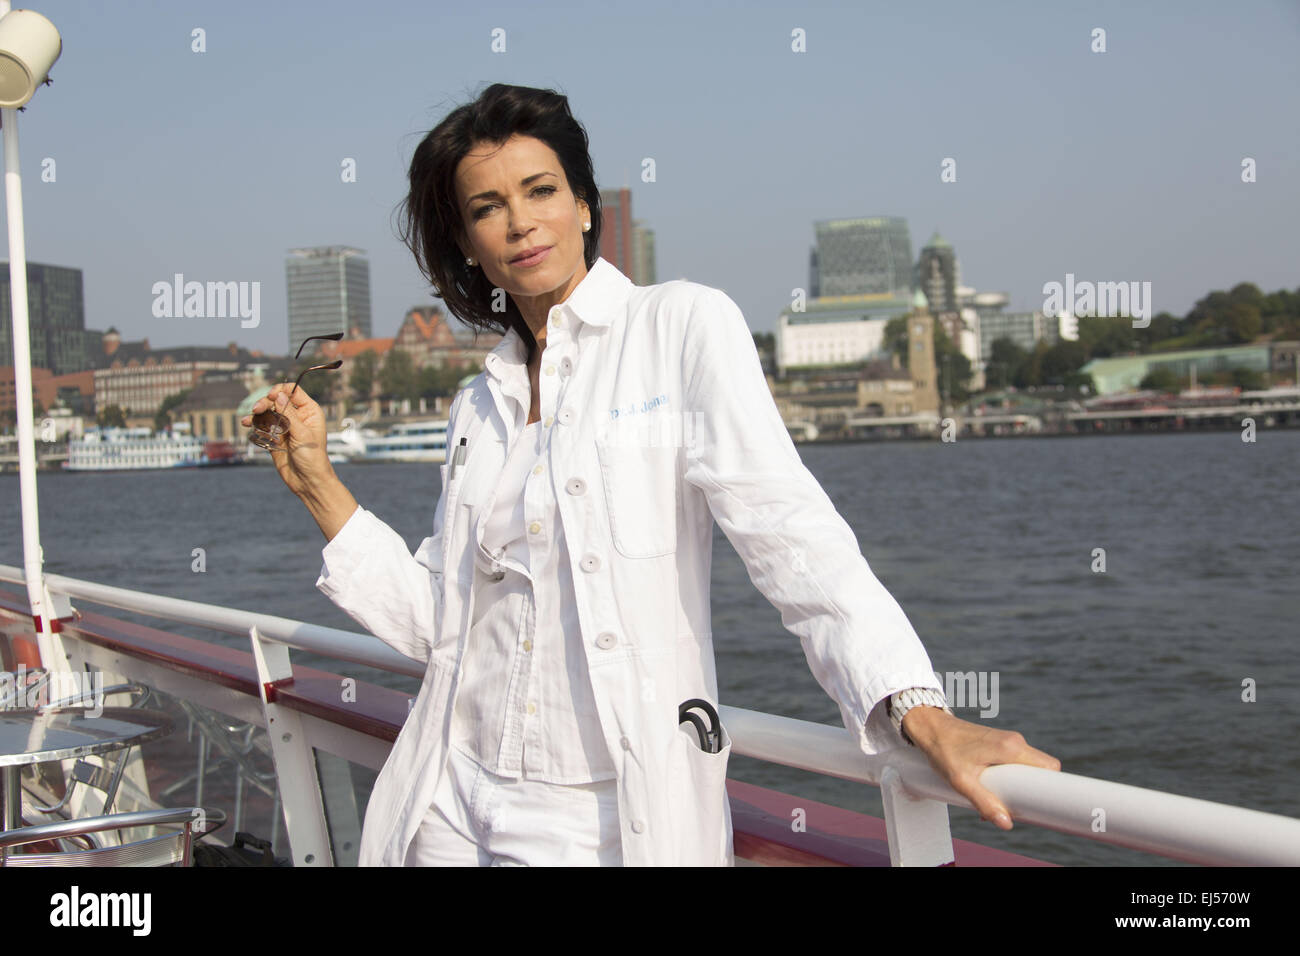 The ARD TV series 'Notruf Hafenkante' - Photocall Featuring: Gerit Kling Where: Hamburg, Germany When: 16 Sep 2014 Stock Photo